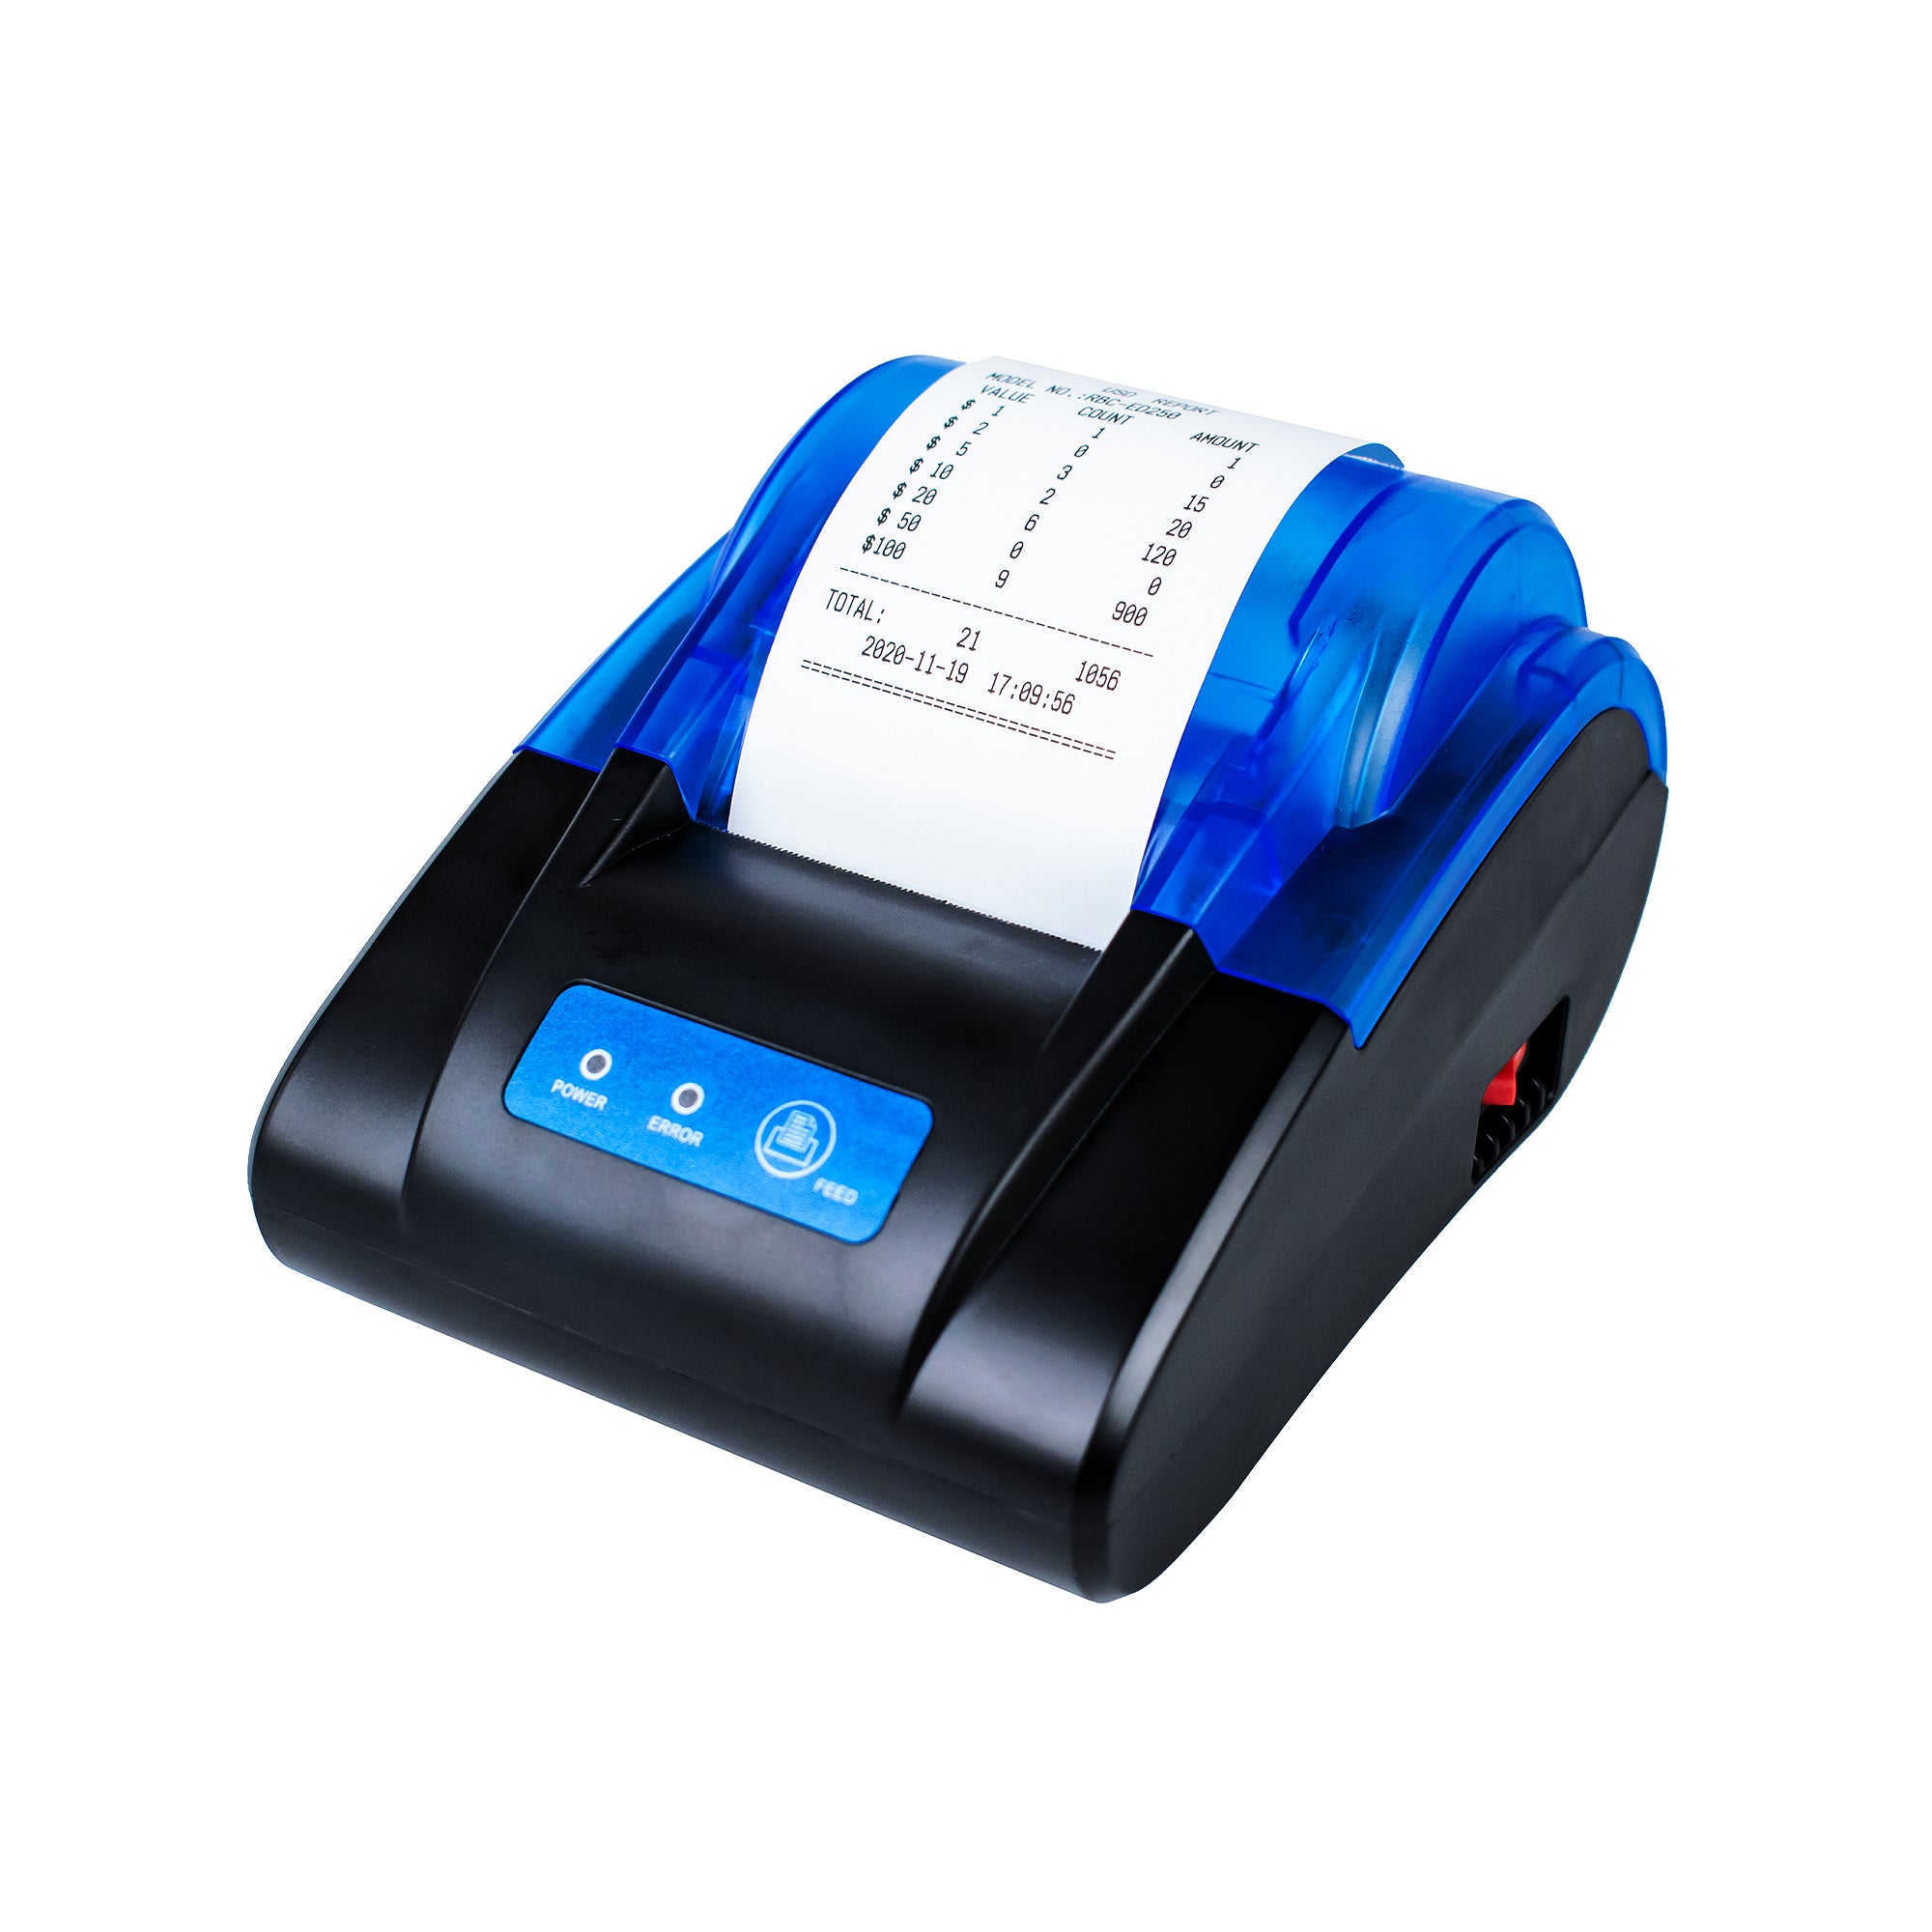 RTP-2, Thermal Printer Accessory for Bill & Coin Counter